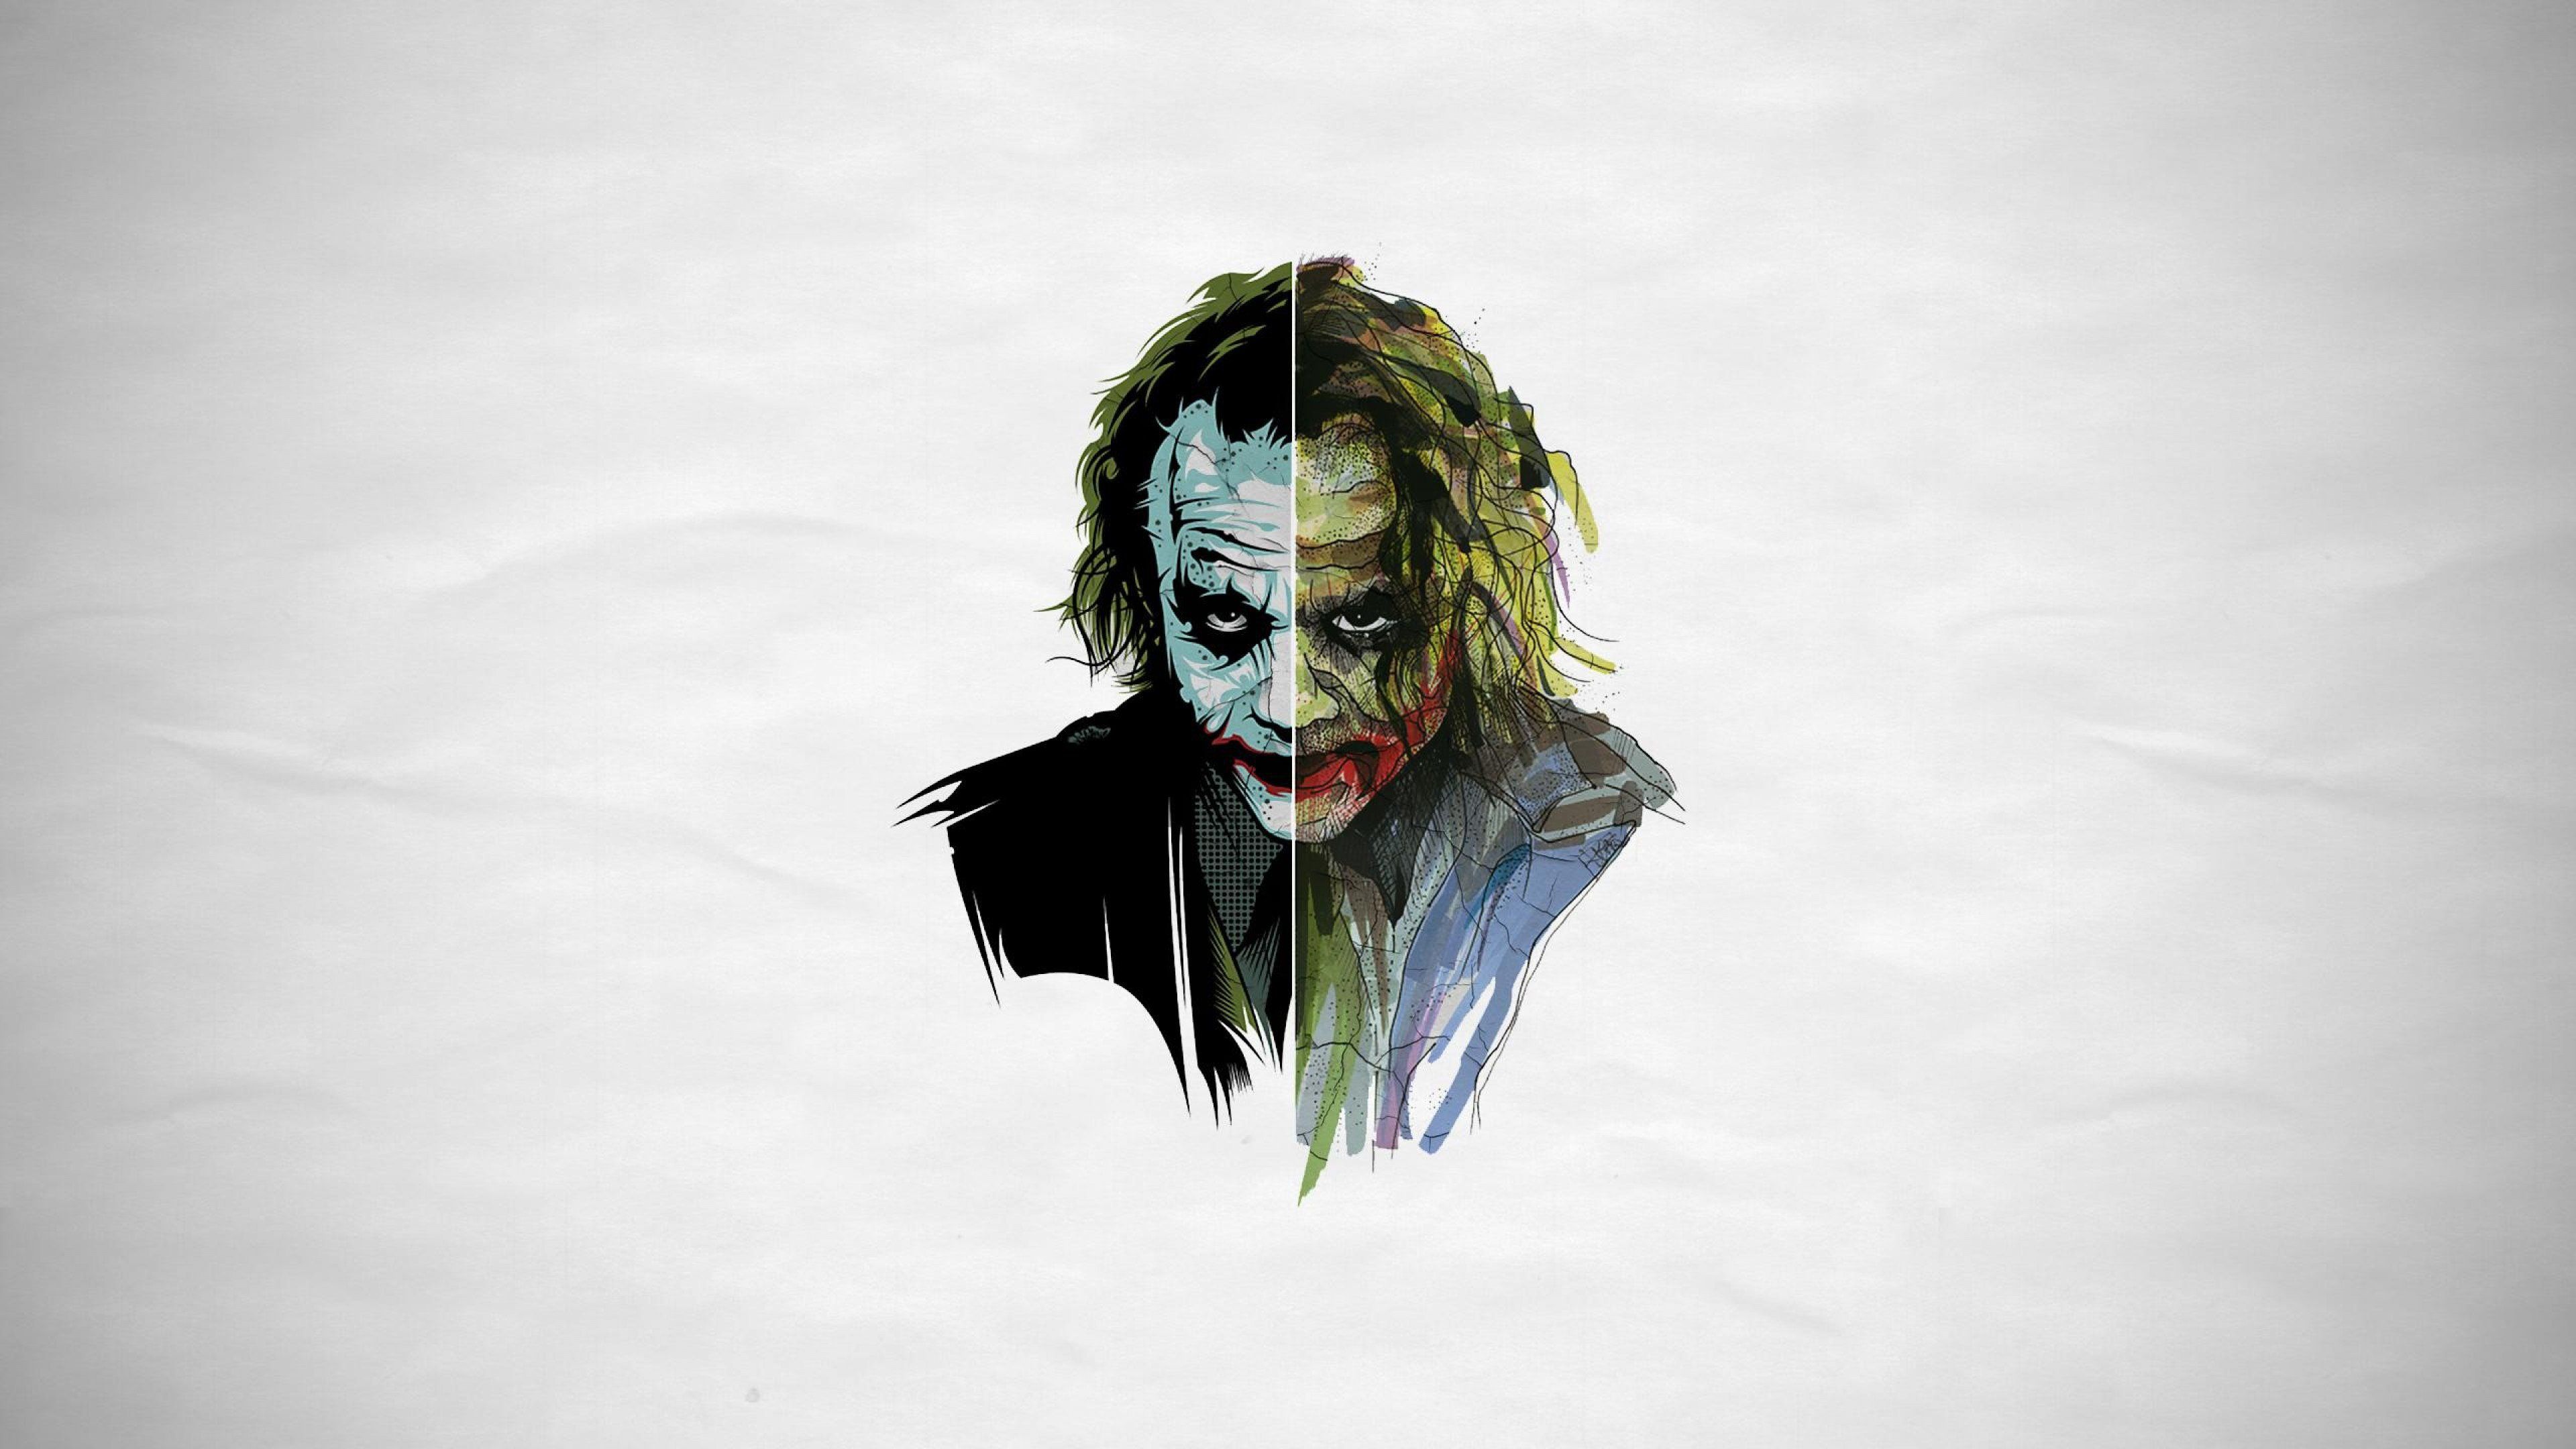 Joker 4k, HD Artist, 4k Wallpaper, Image, Background, Photo